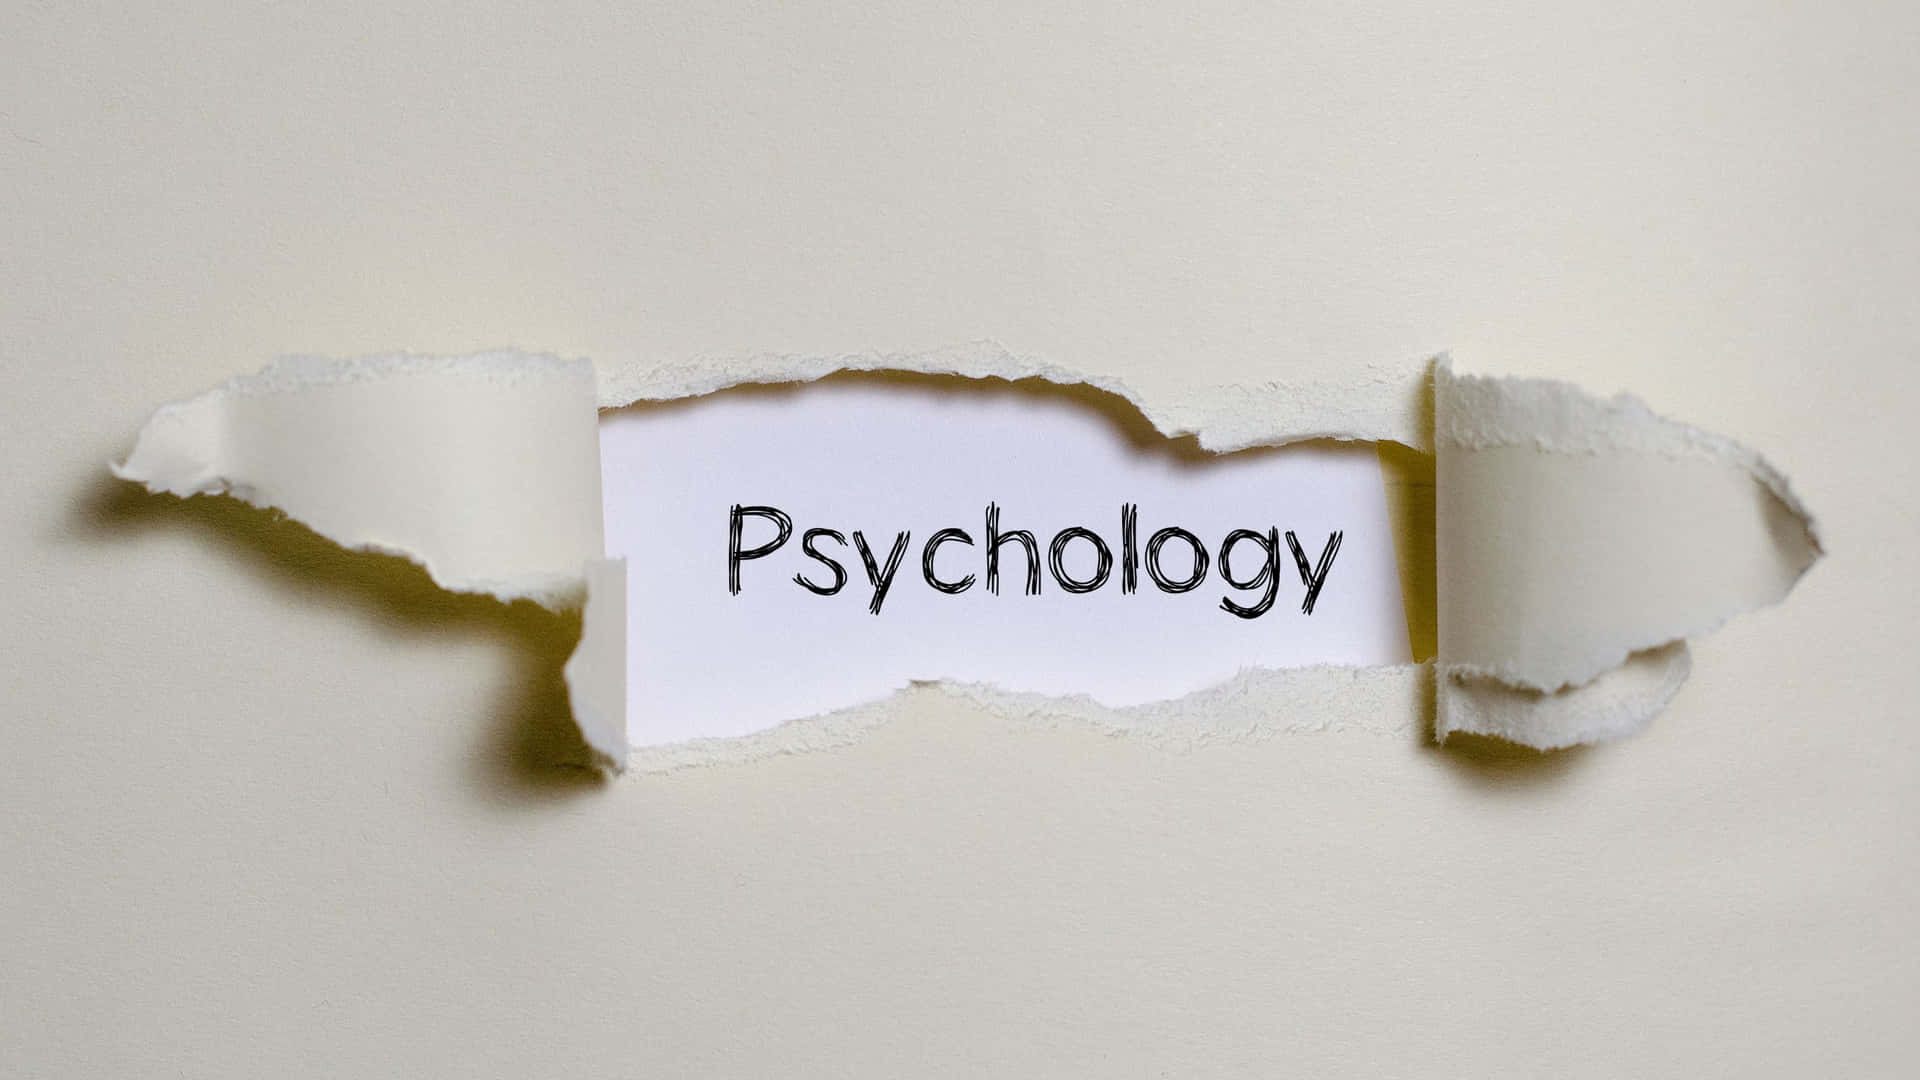 Psychology On A Piece Of Paper